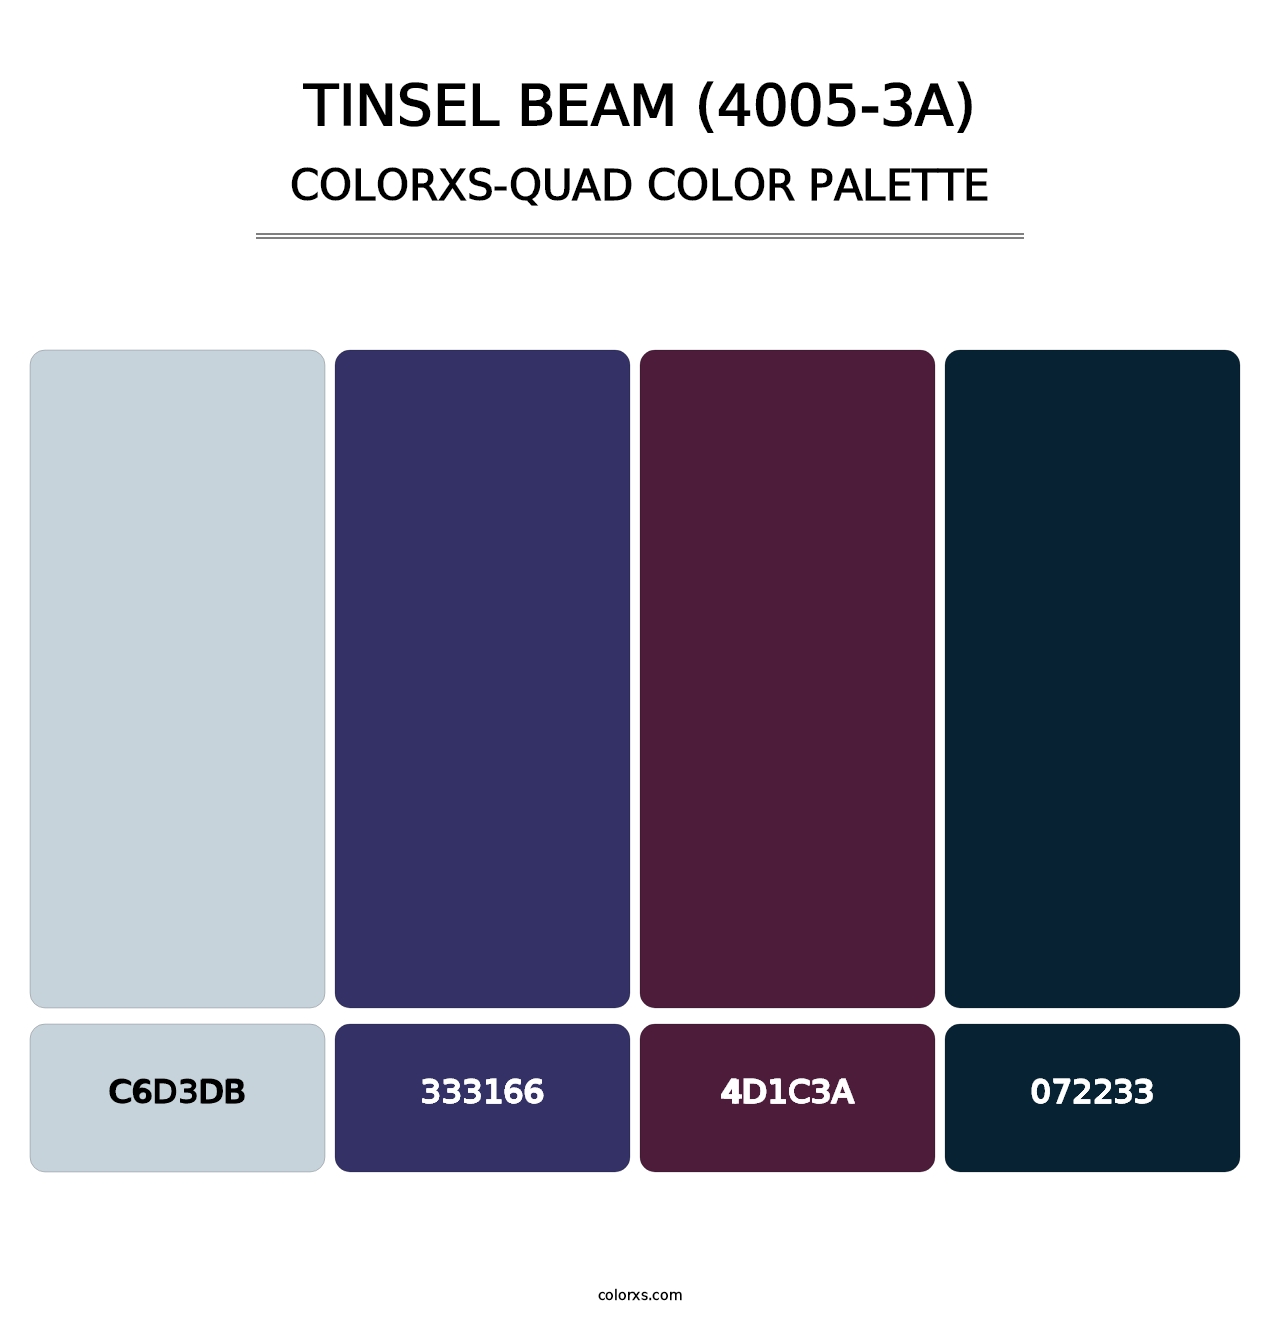 Tinsel Beam (4005-3A) - Colorxs Quad Palette